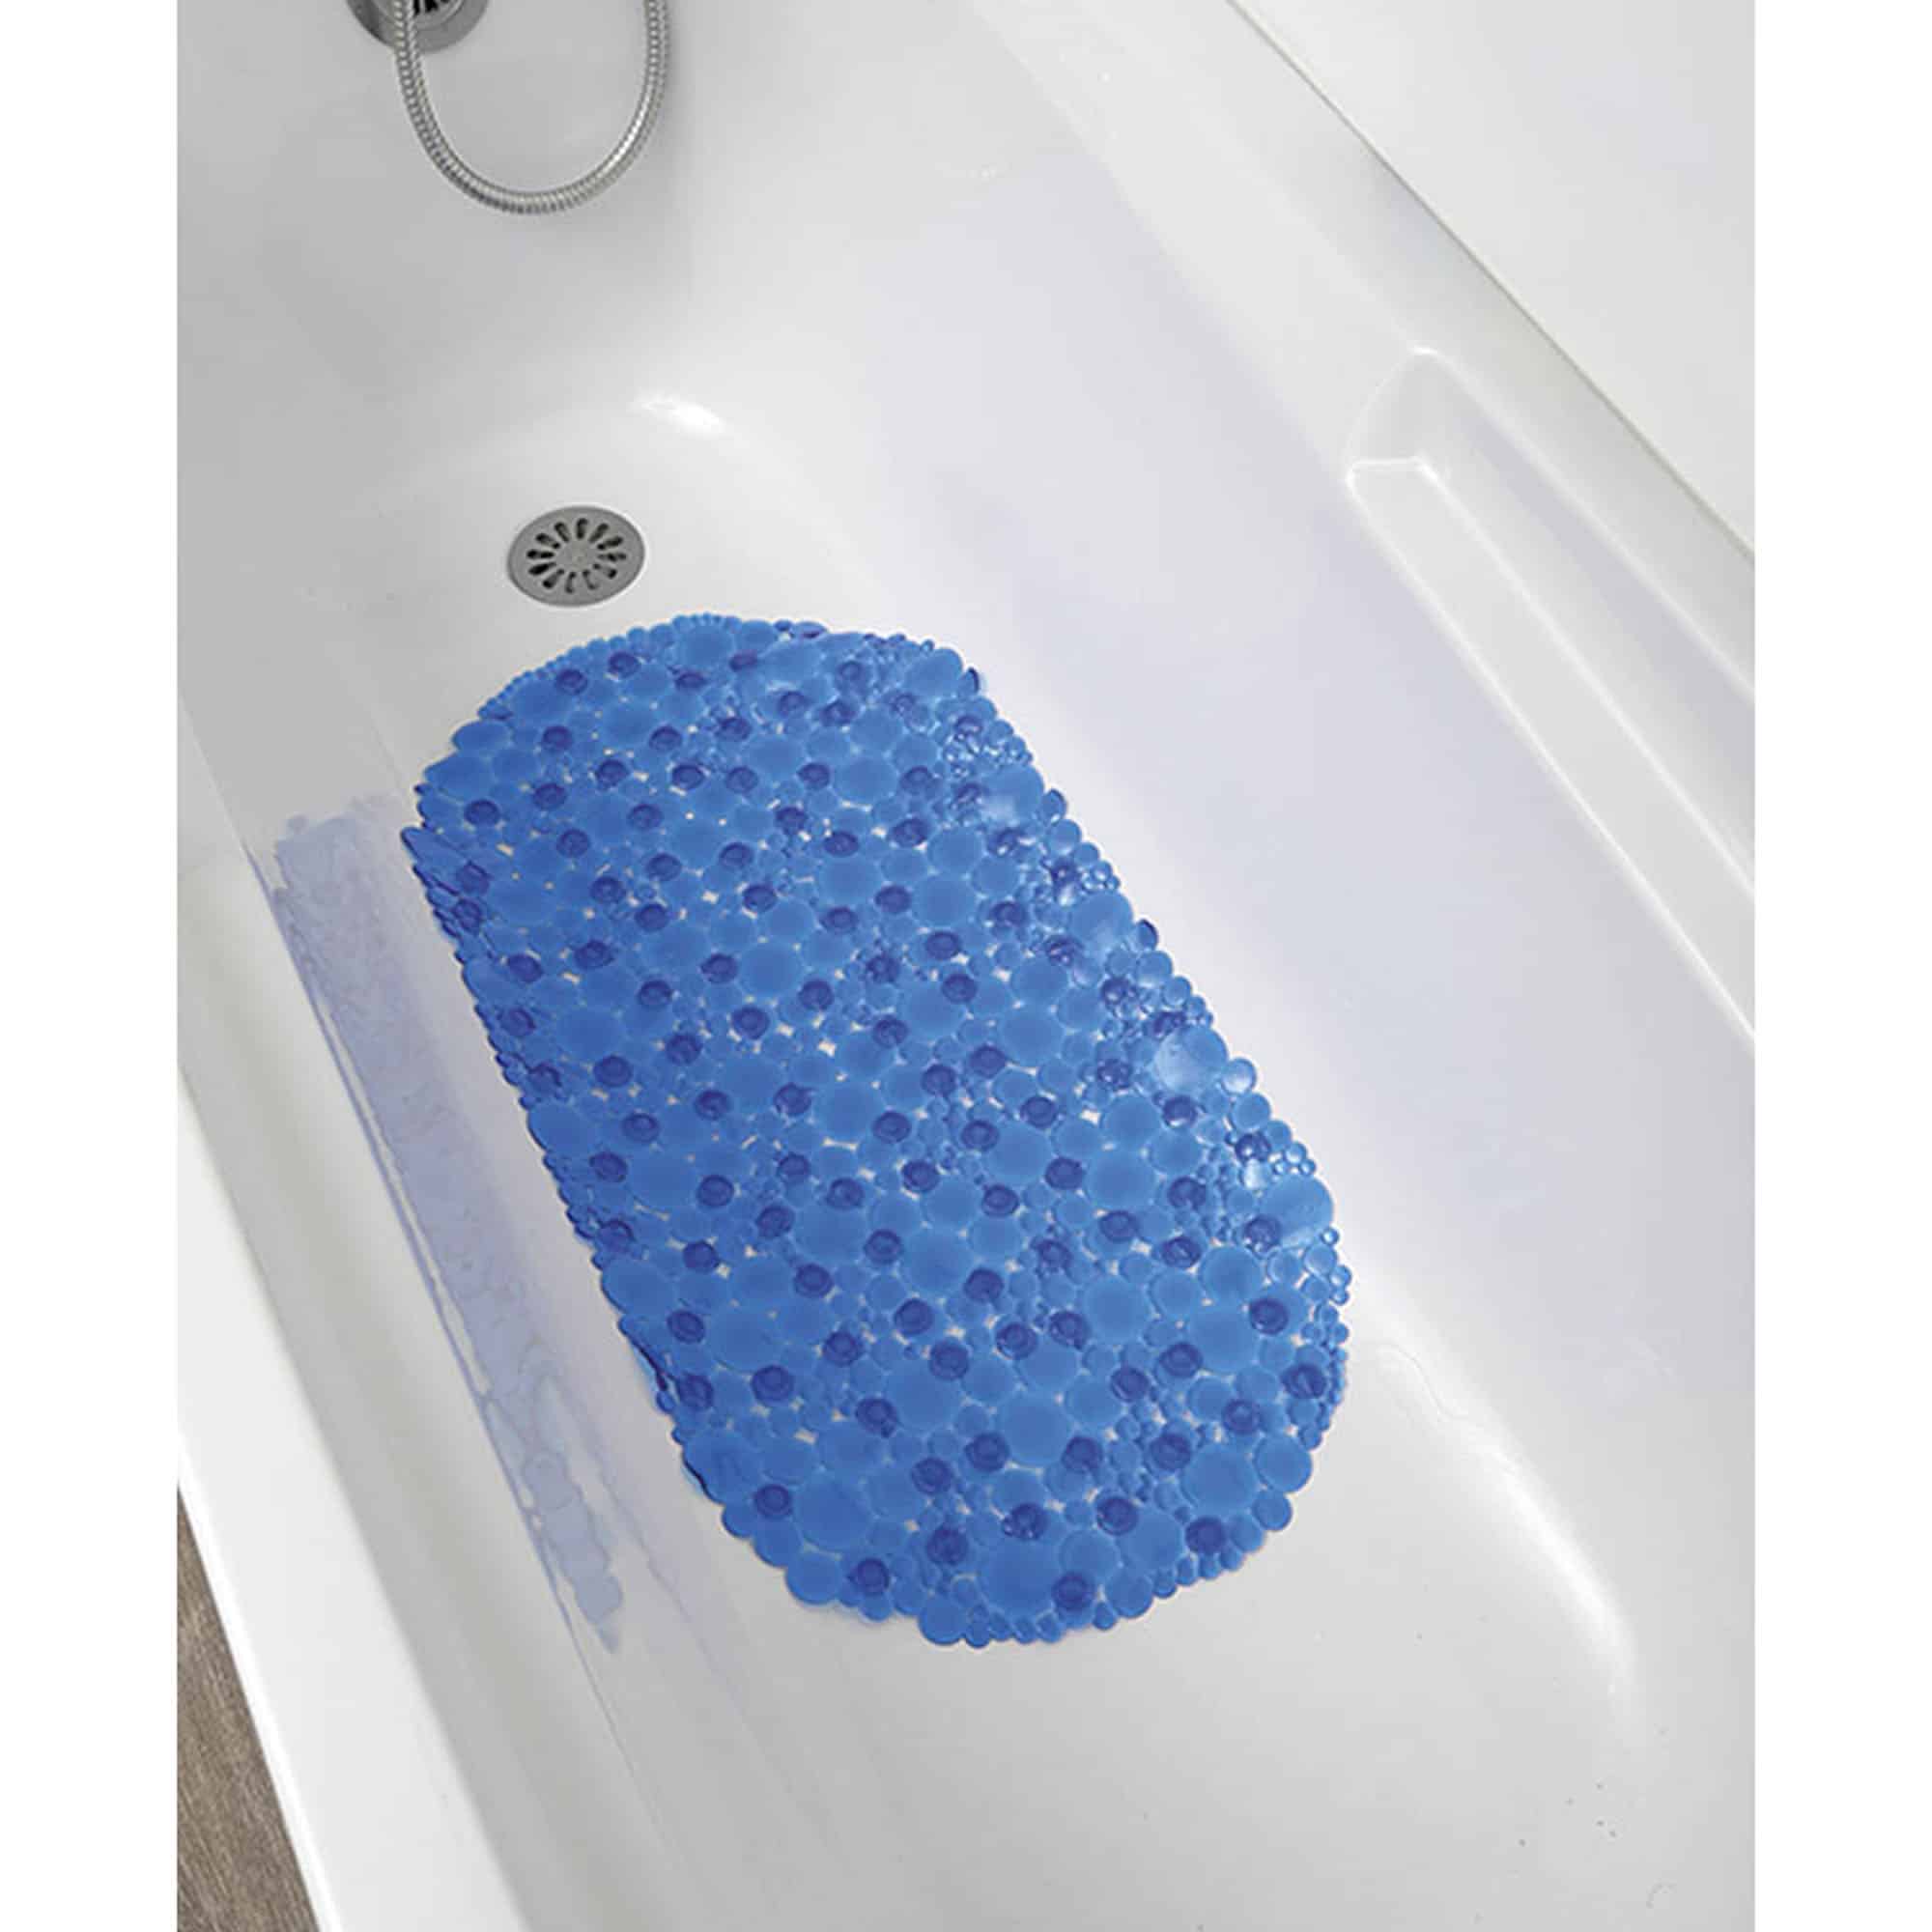 Bubbles Non-Slip Square Shower Mat 20 L x 20 W - Solid Peacock Blue